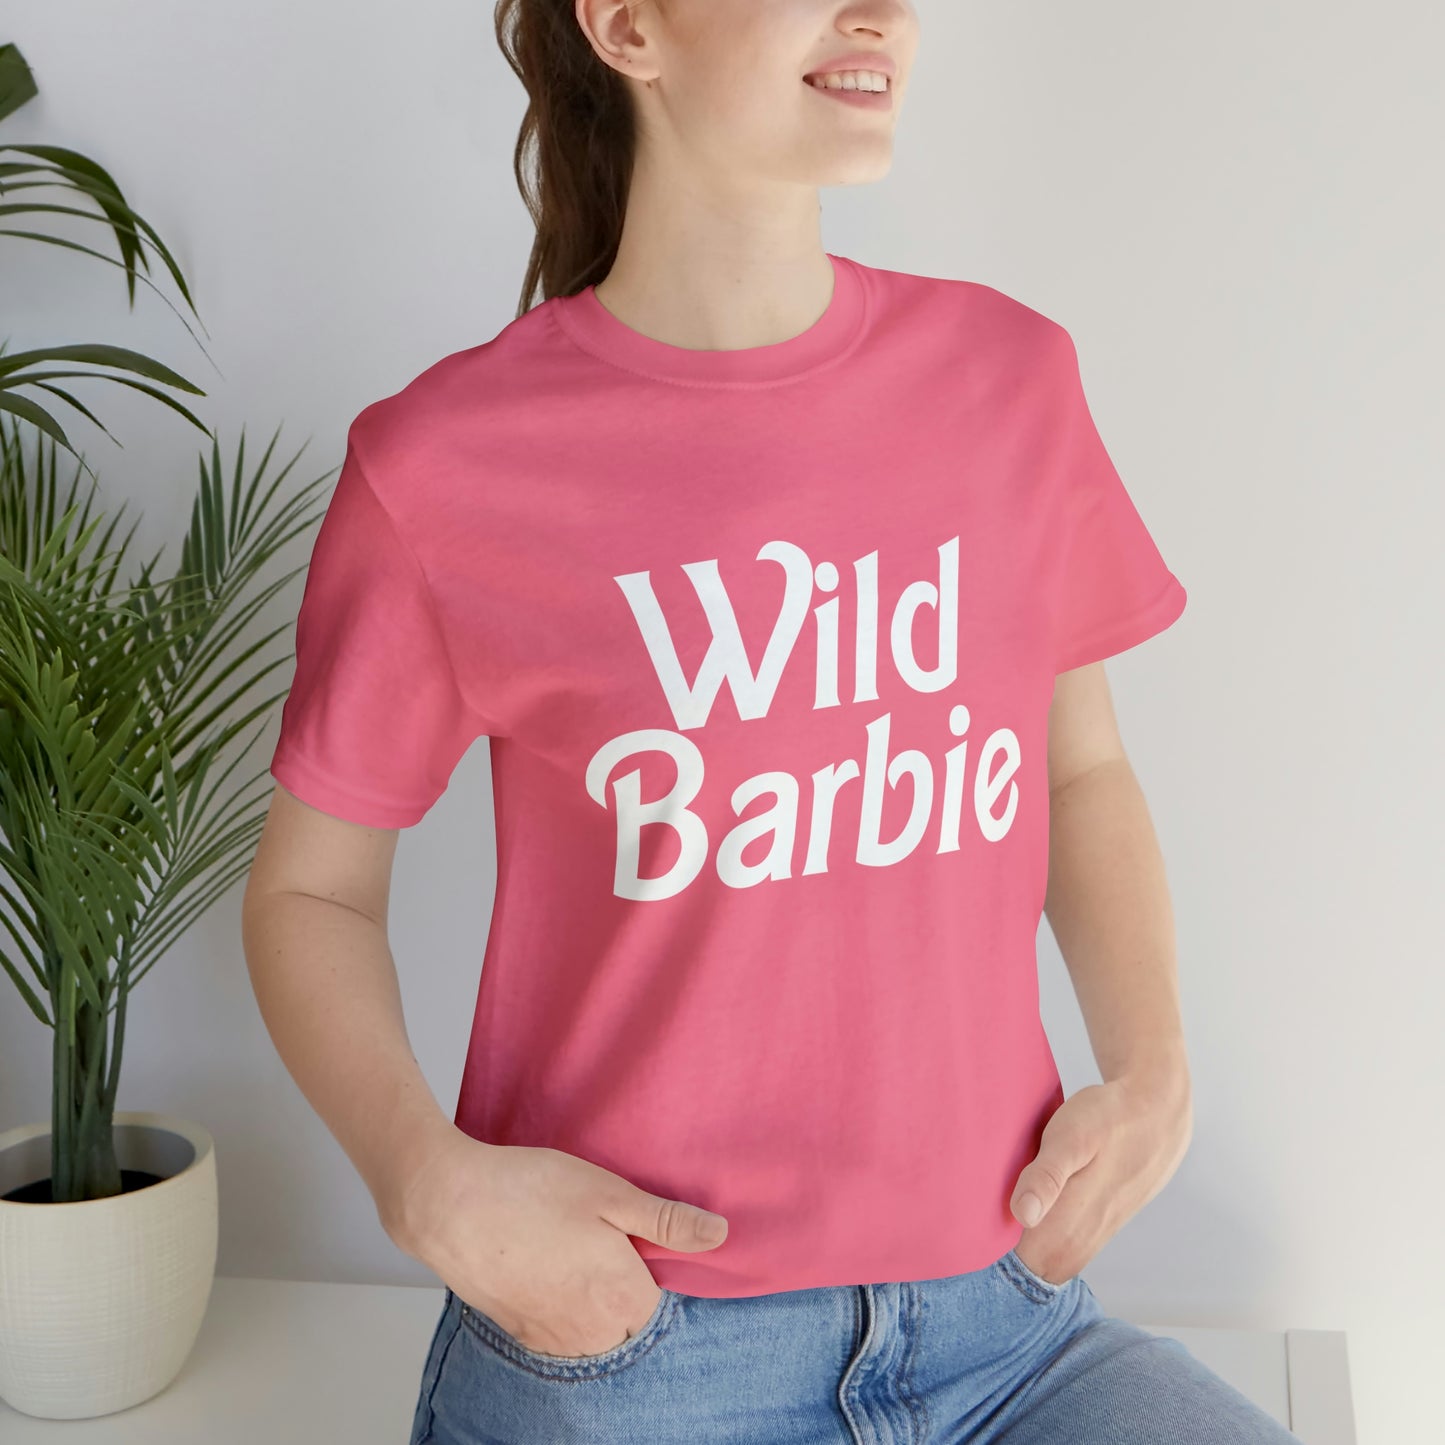 Wild Barbie